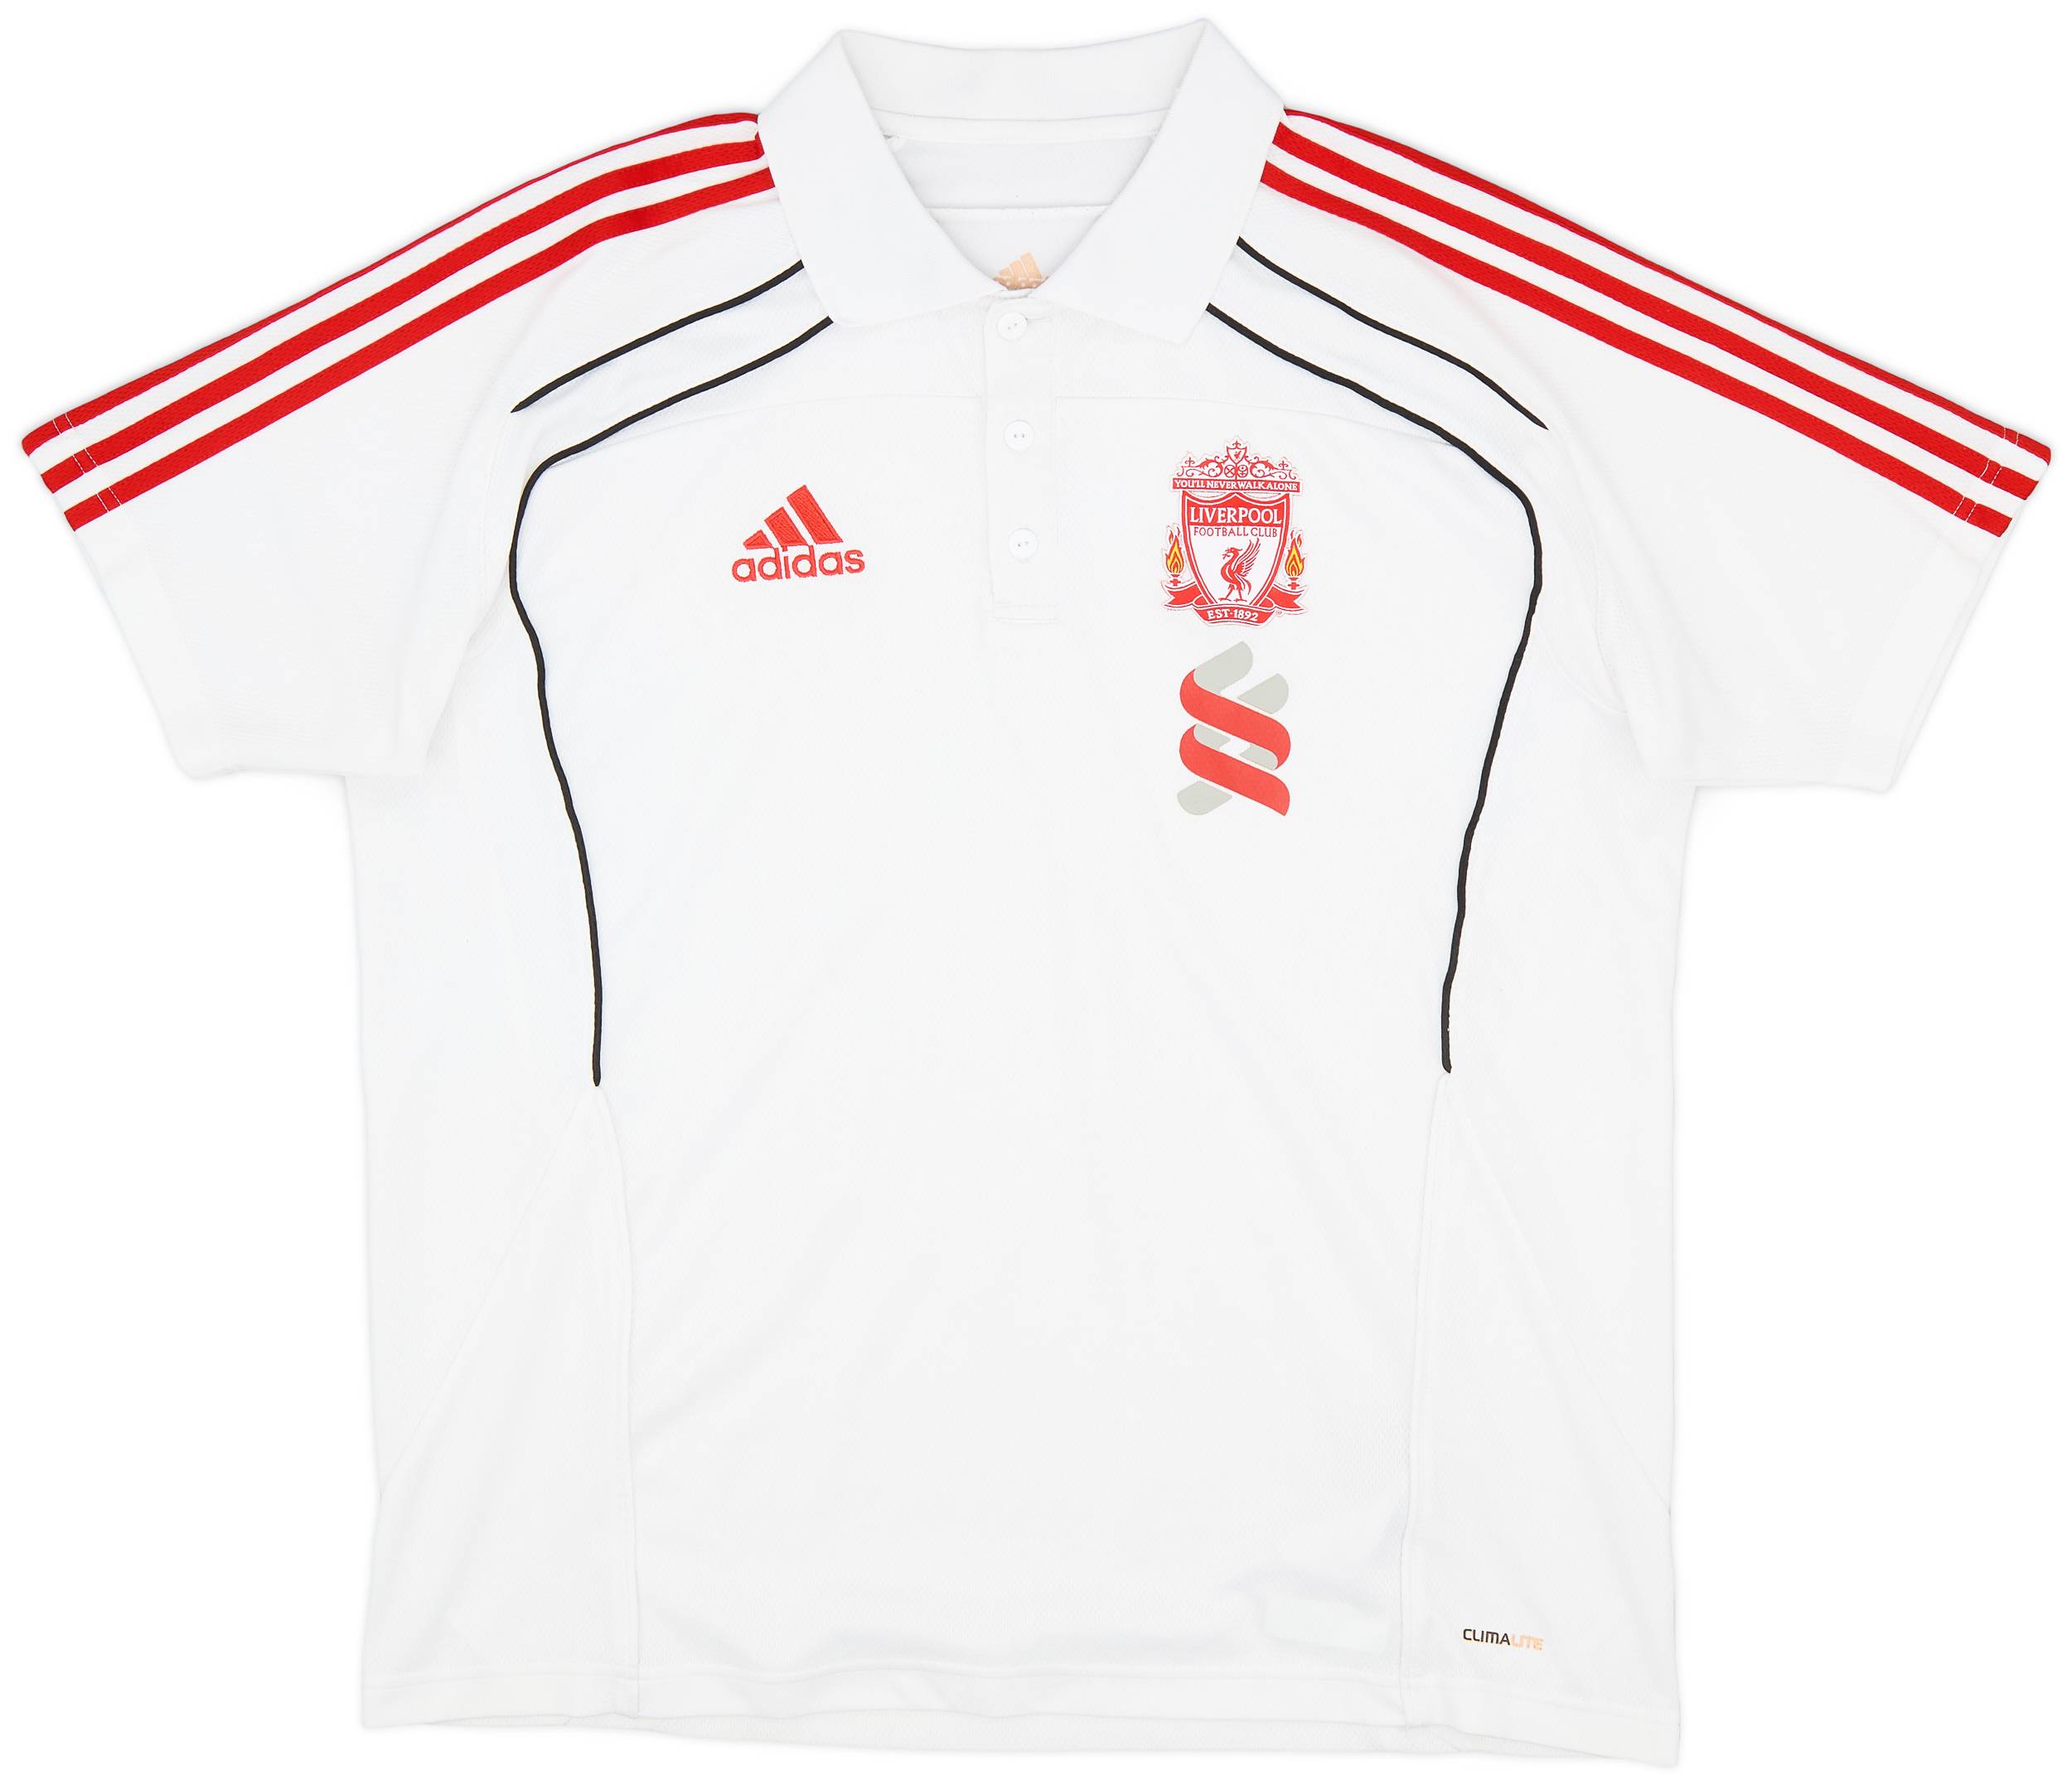 2010-11 Liverpool adidas Polo Shirt - 9/10 - (L)